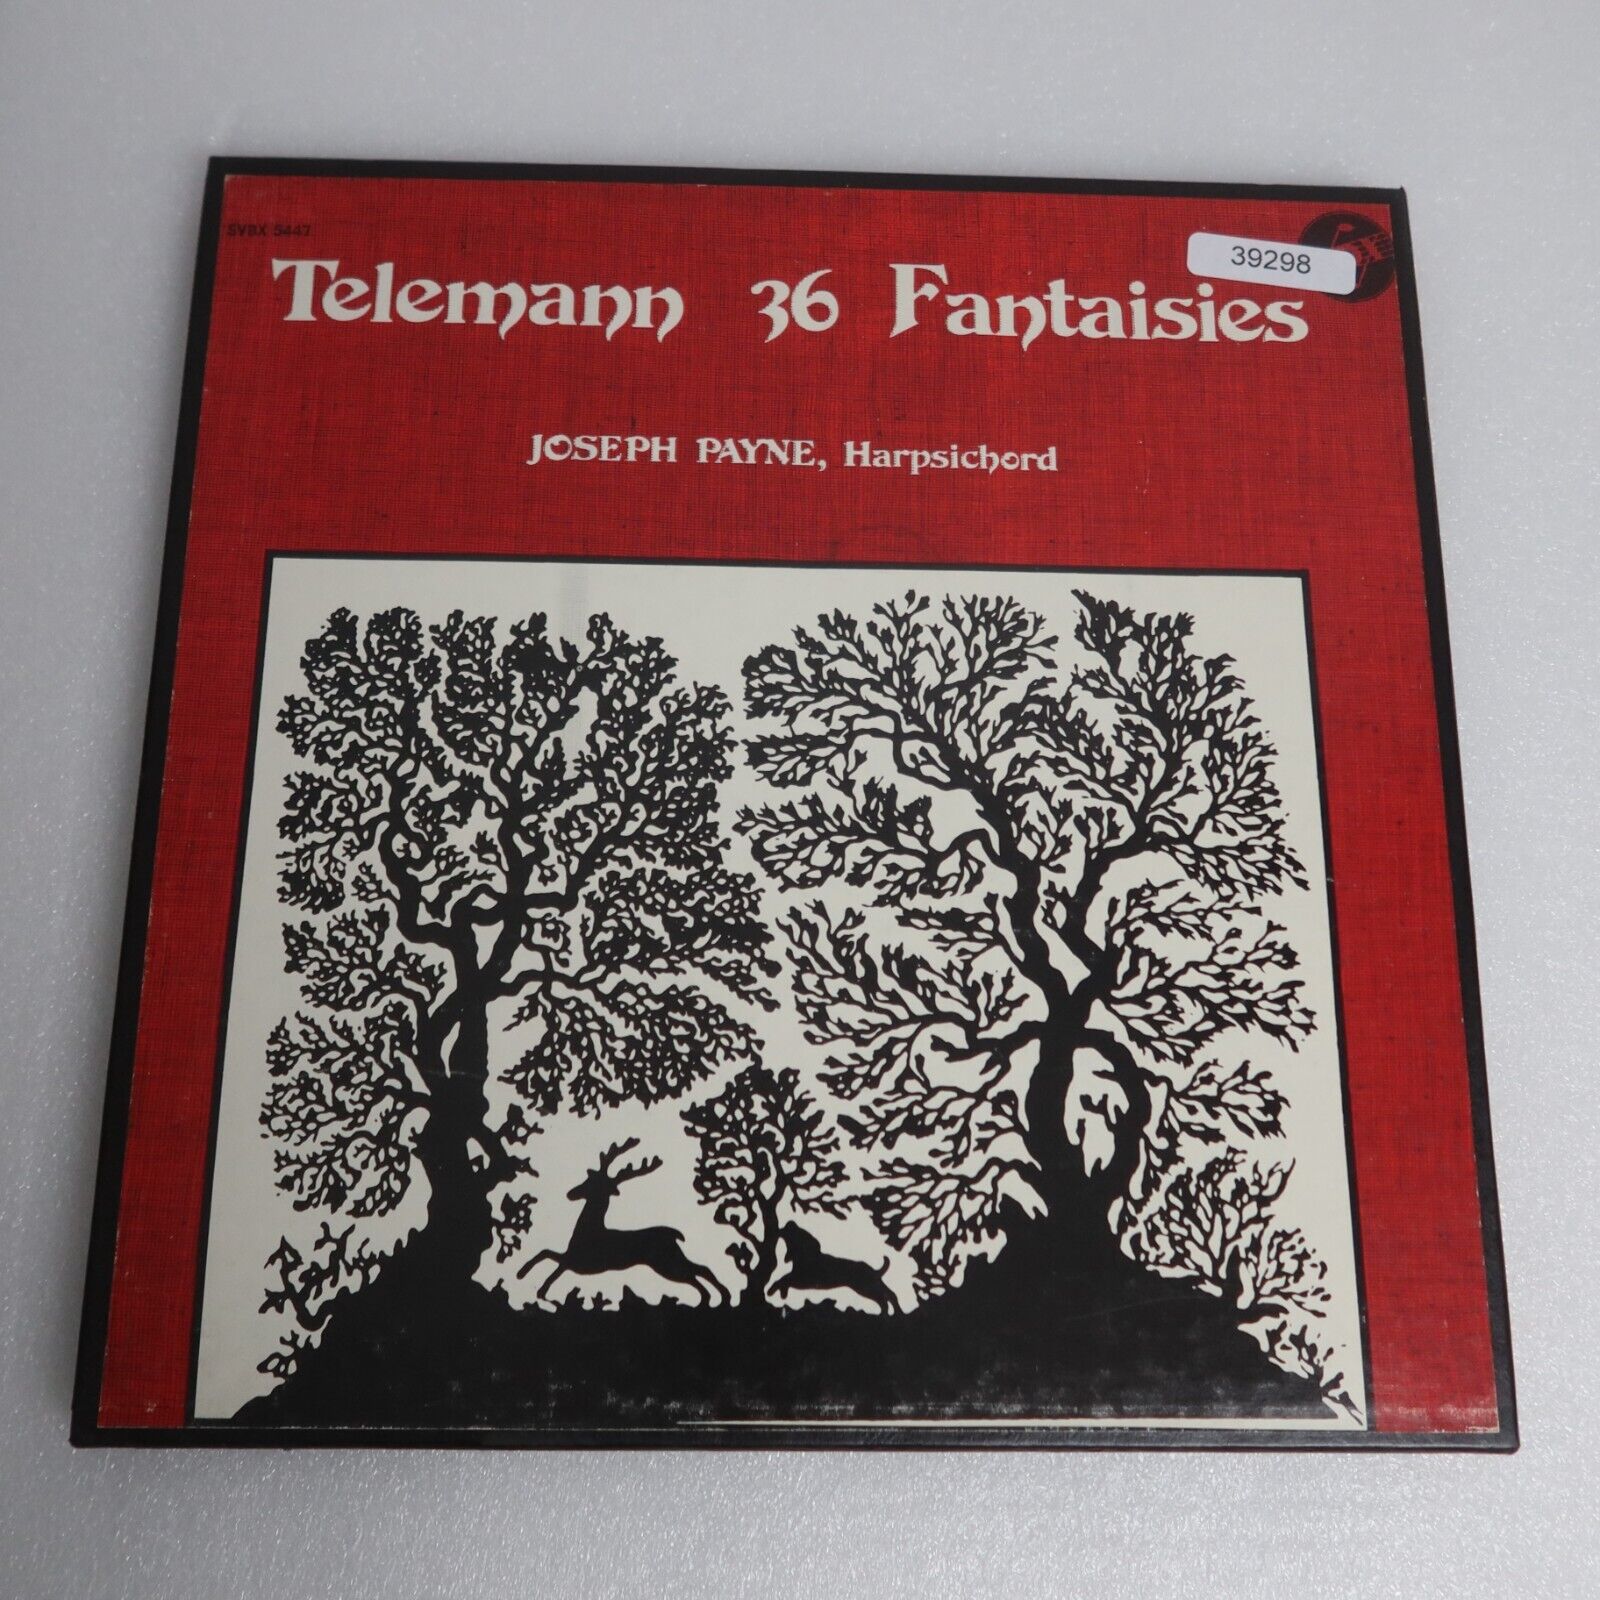 Joseph Payne Telemann 36 Fantaisies LP Vinyl Record Album